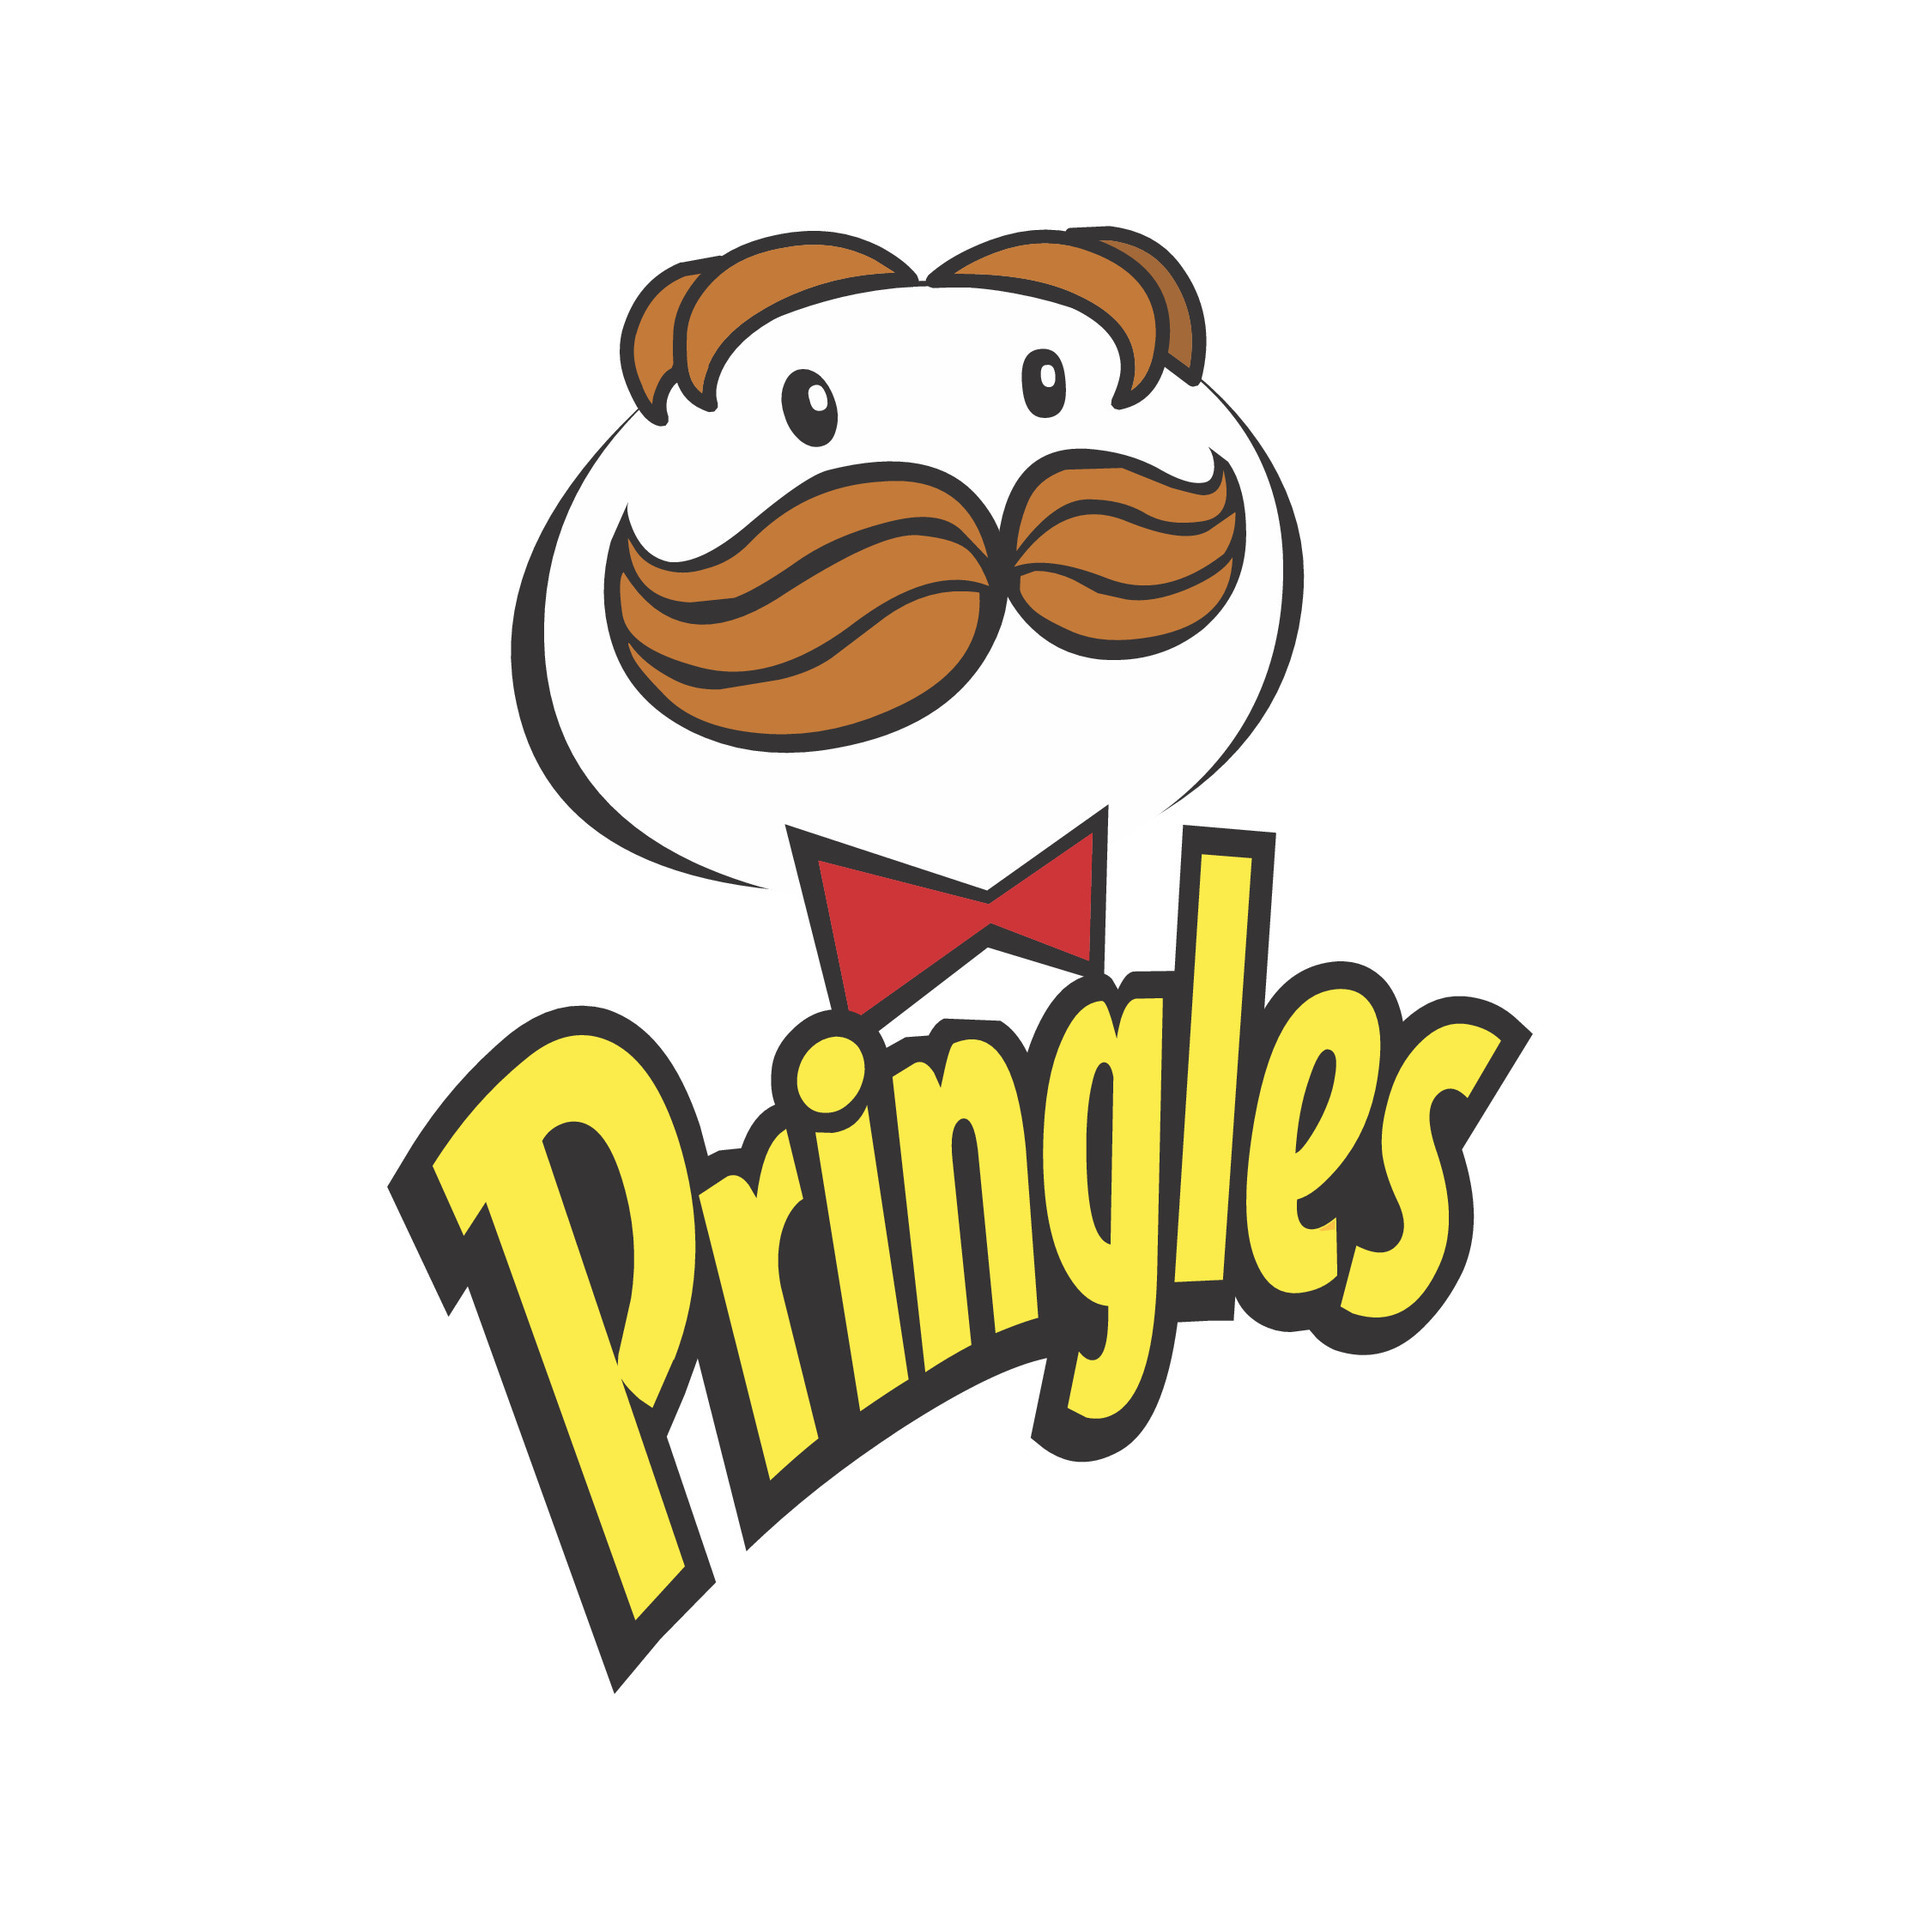 Pringles logo editorial vector on white background 26783428 Vector Art ...